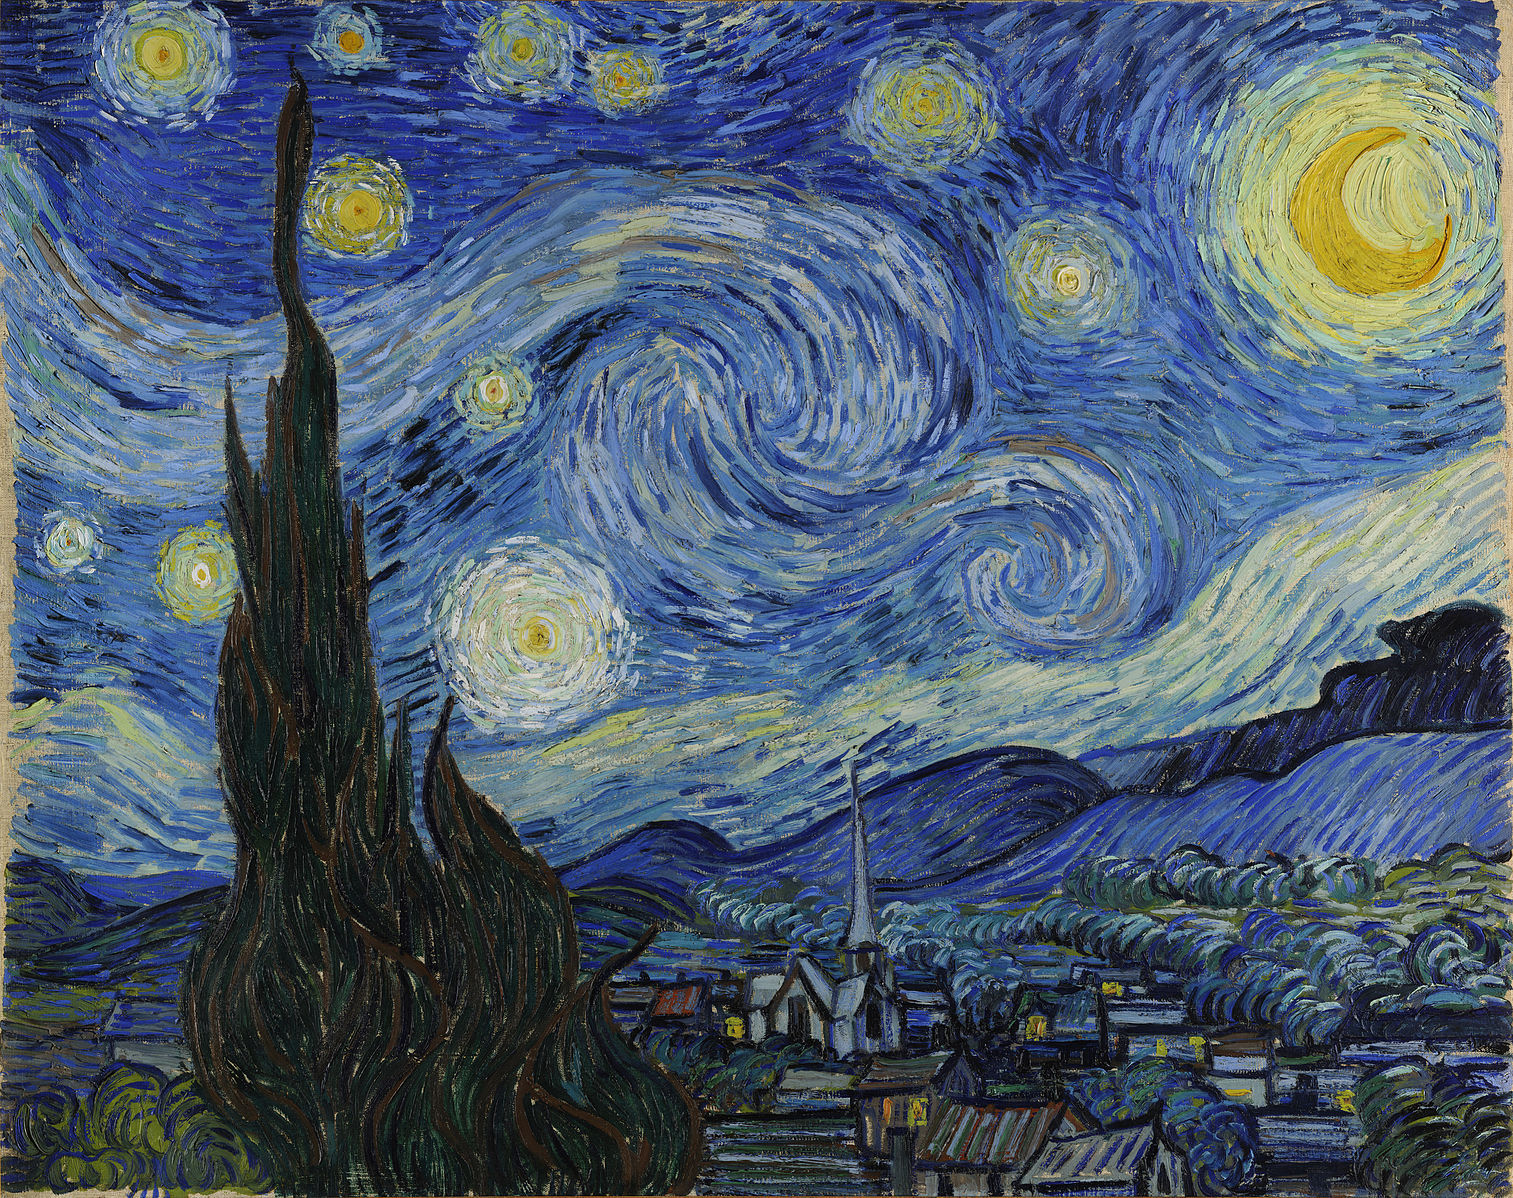 Constellation Piercings: The Starry Night – Vincent Van Gogh